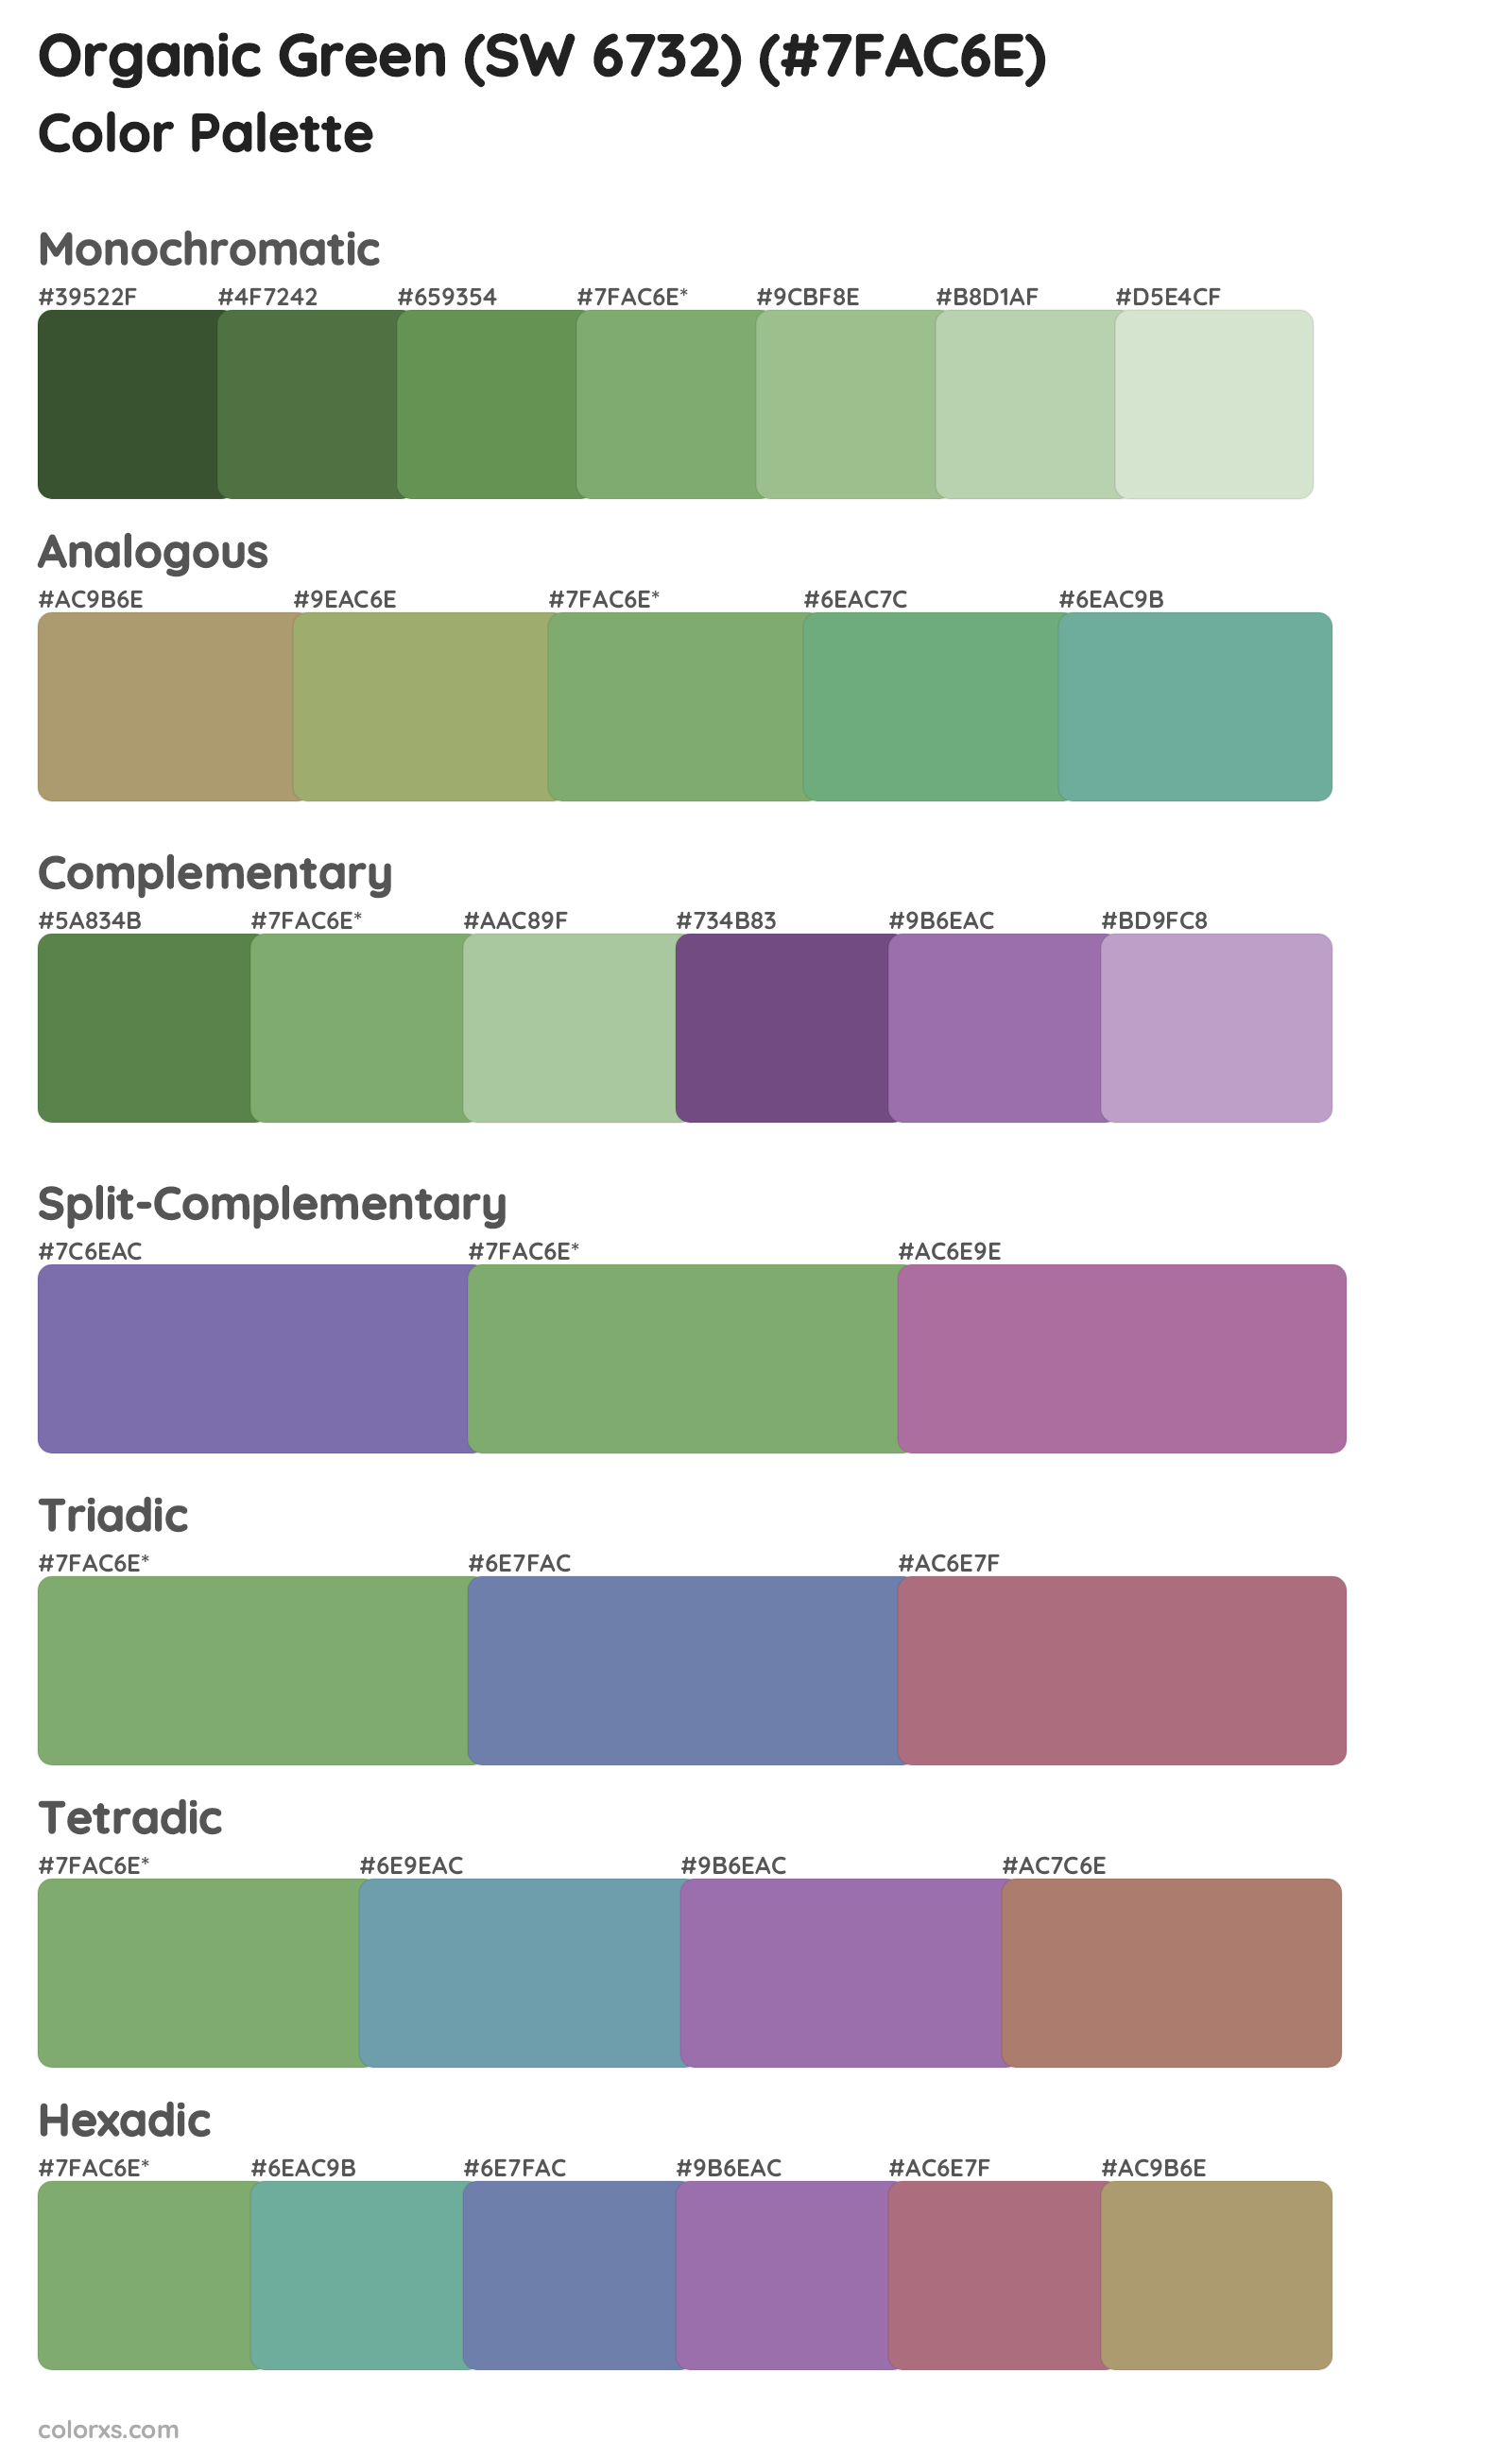 Organic Green (SW 6732) Color Scheme Palettes